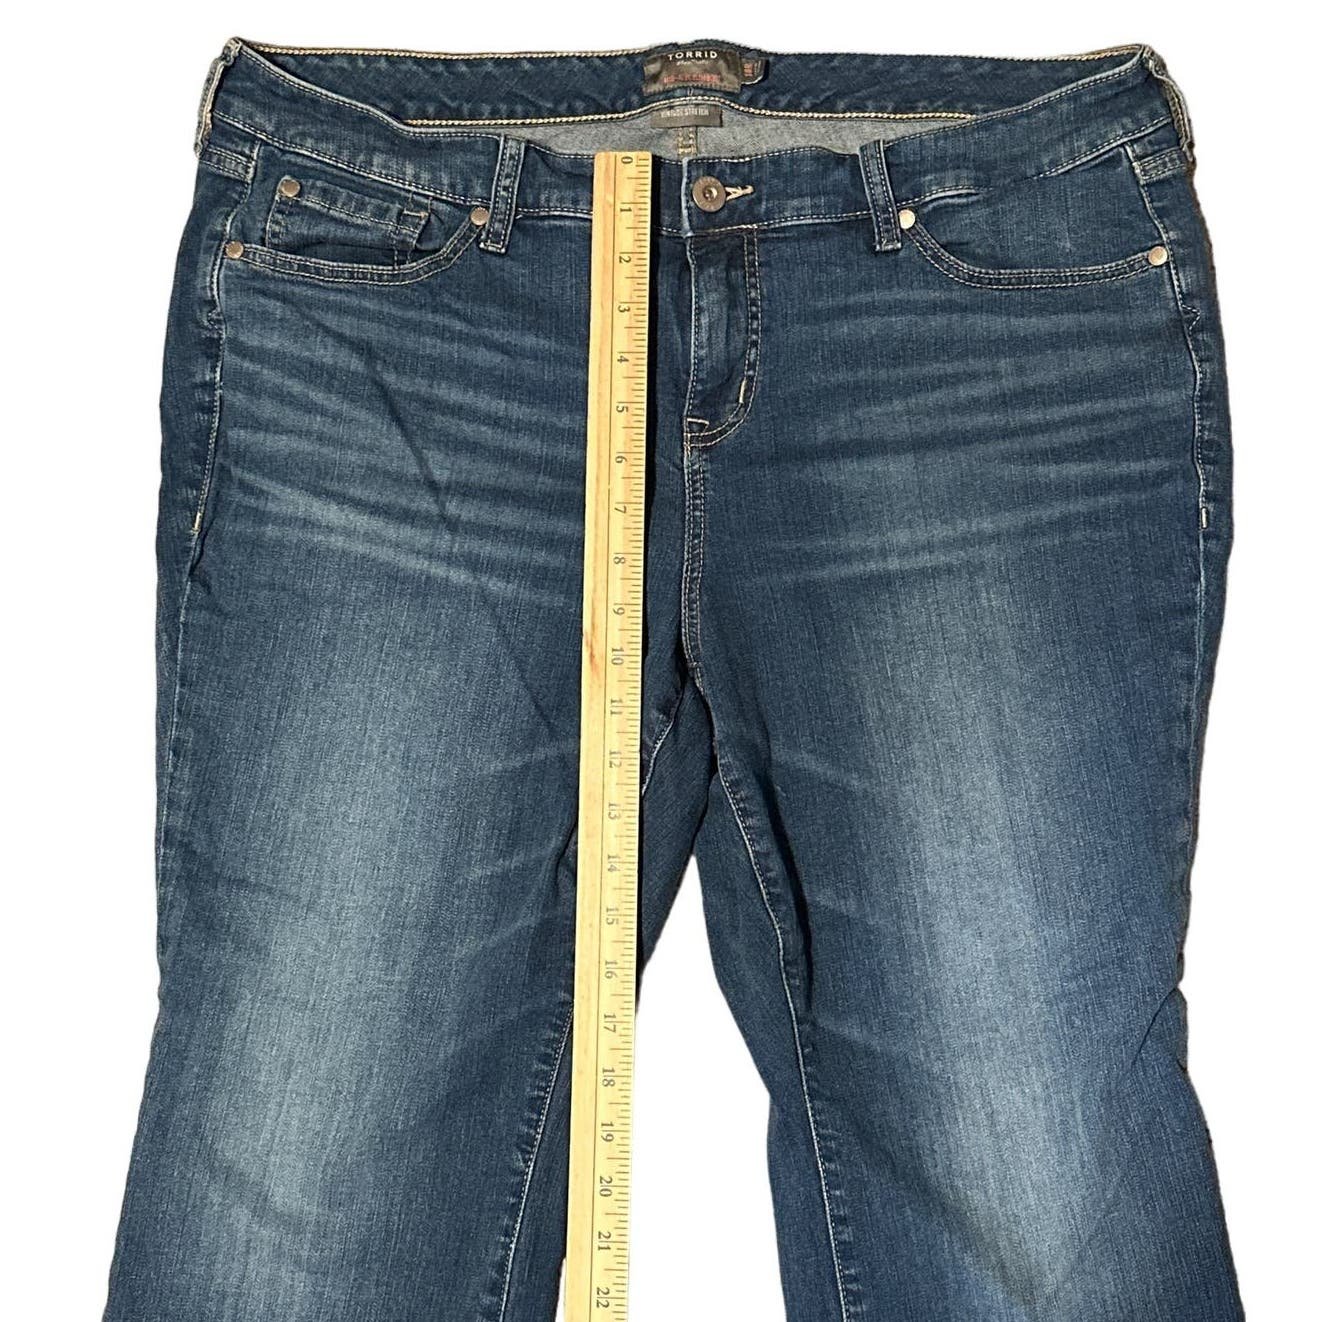 reasonable price Torrid Jeans LiooqV2Cu Hot Sale